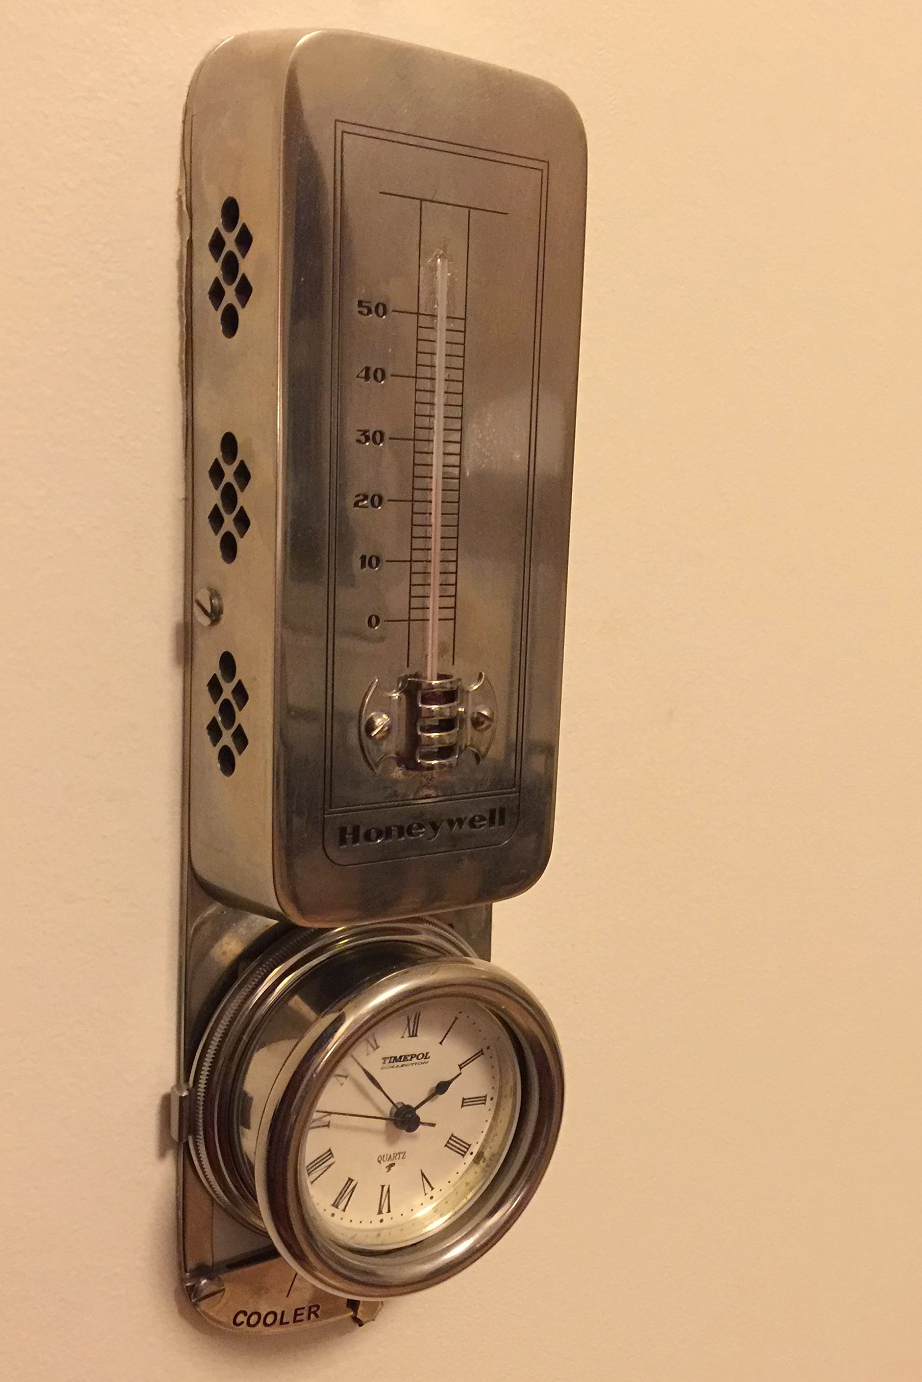 Nickel thermostat. So retro at the Rialto.